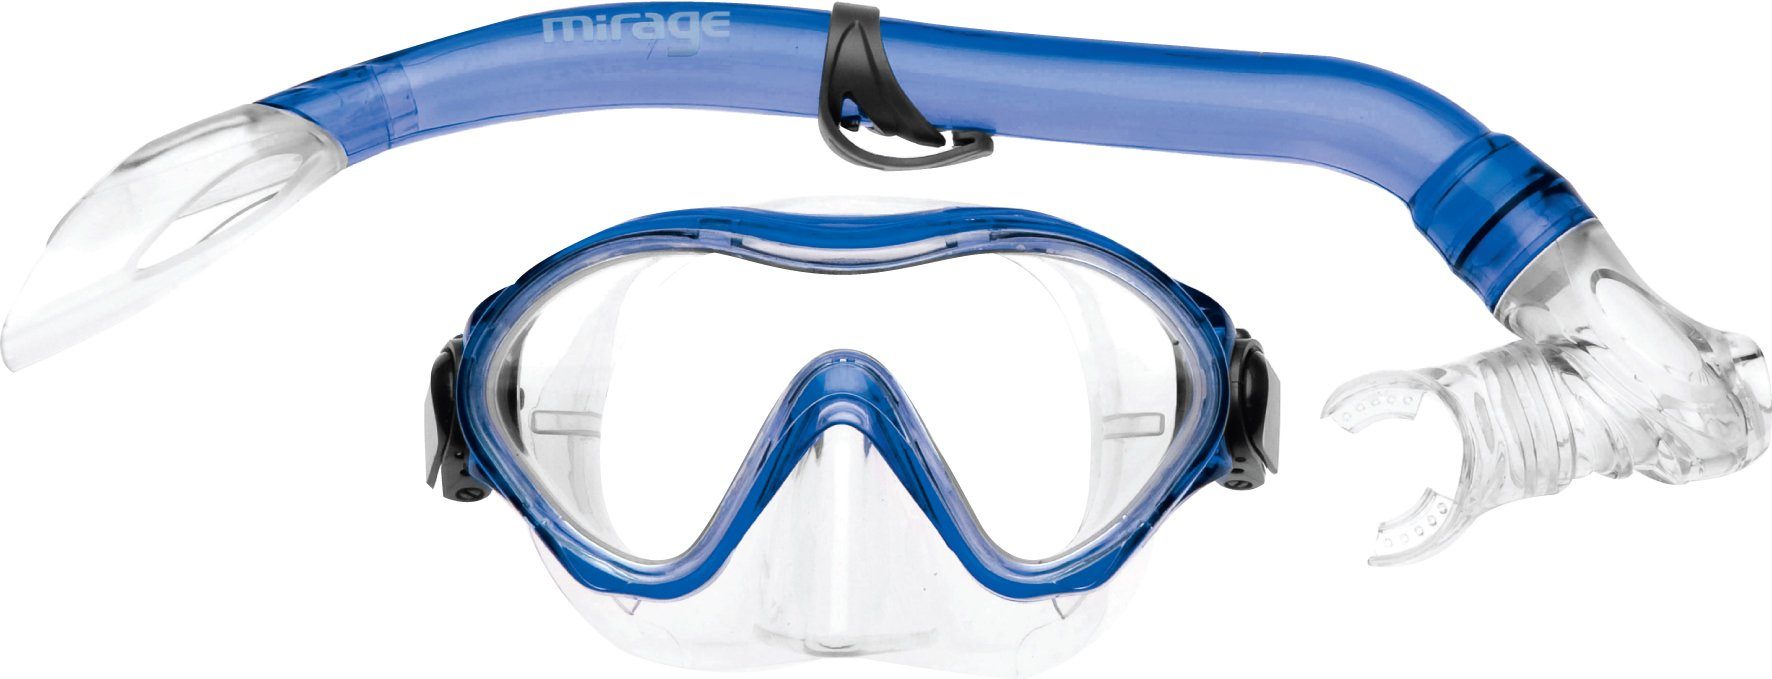 Mirage Goby Junior Mask & Snorkel Sets